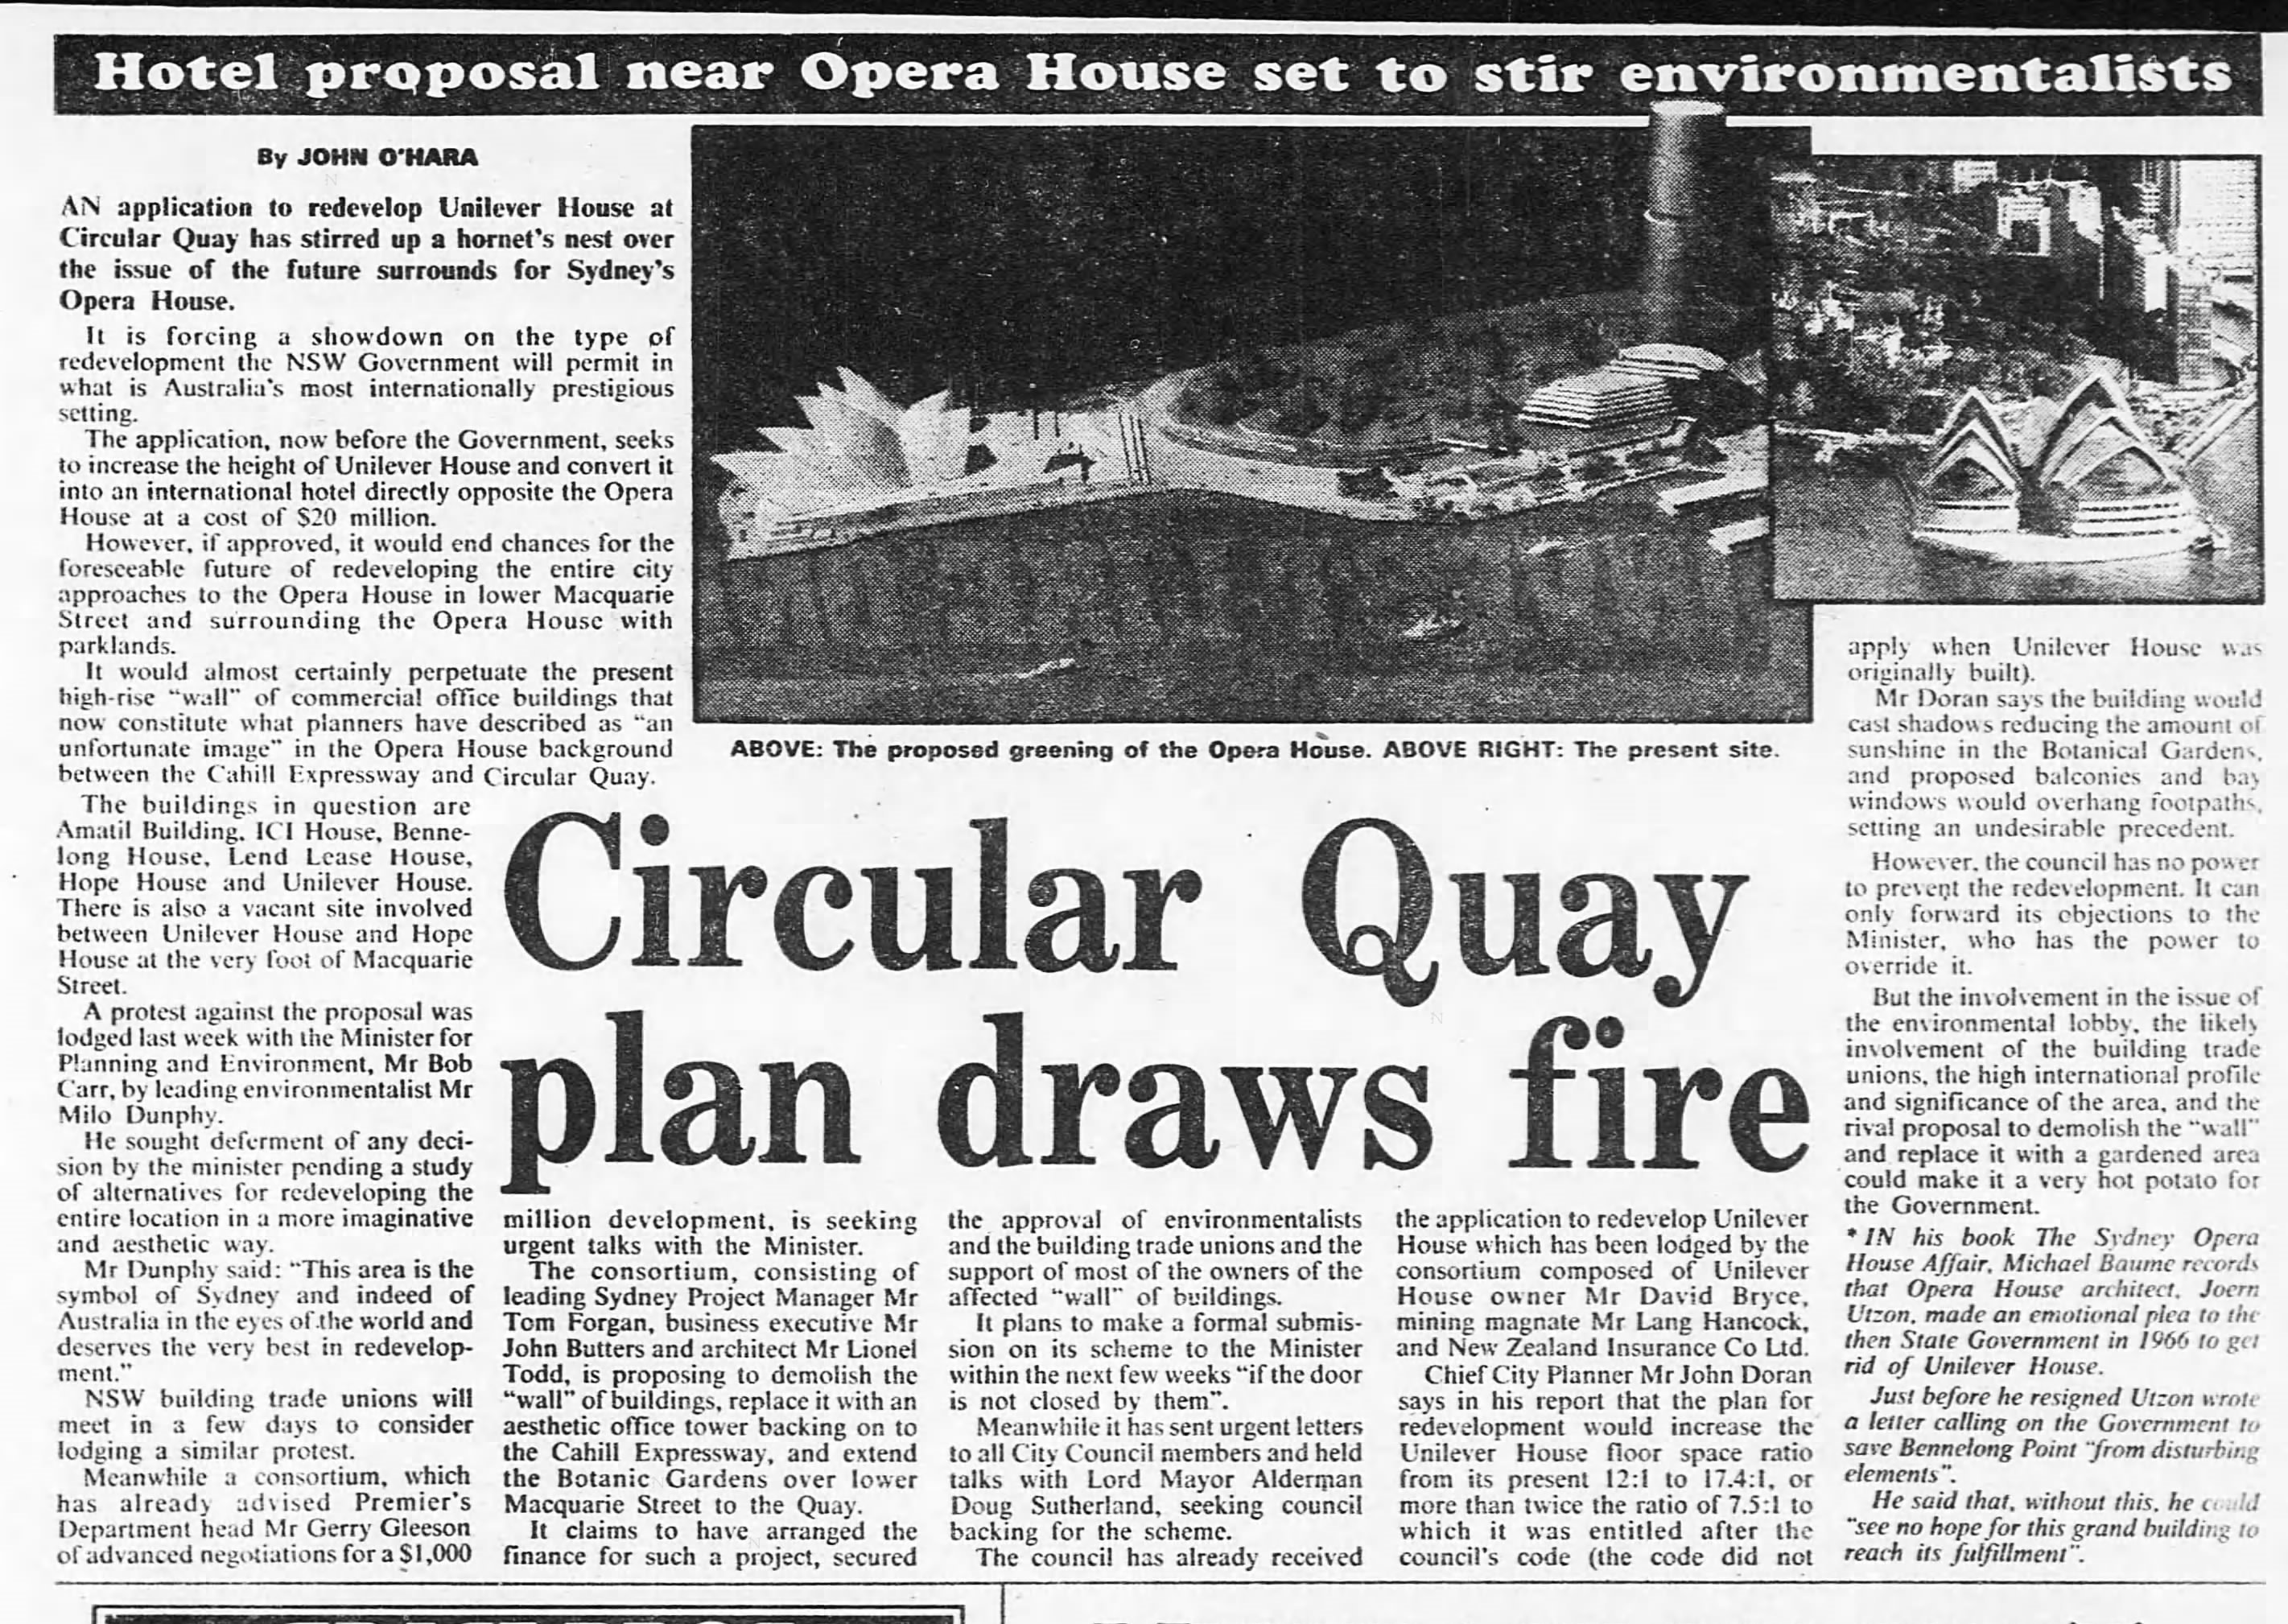 East Circular Quay March 16 1986 Sun Herald 17